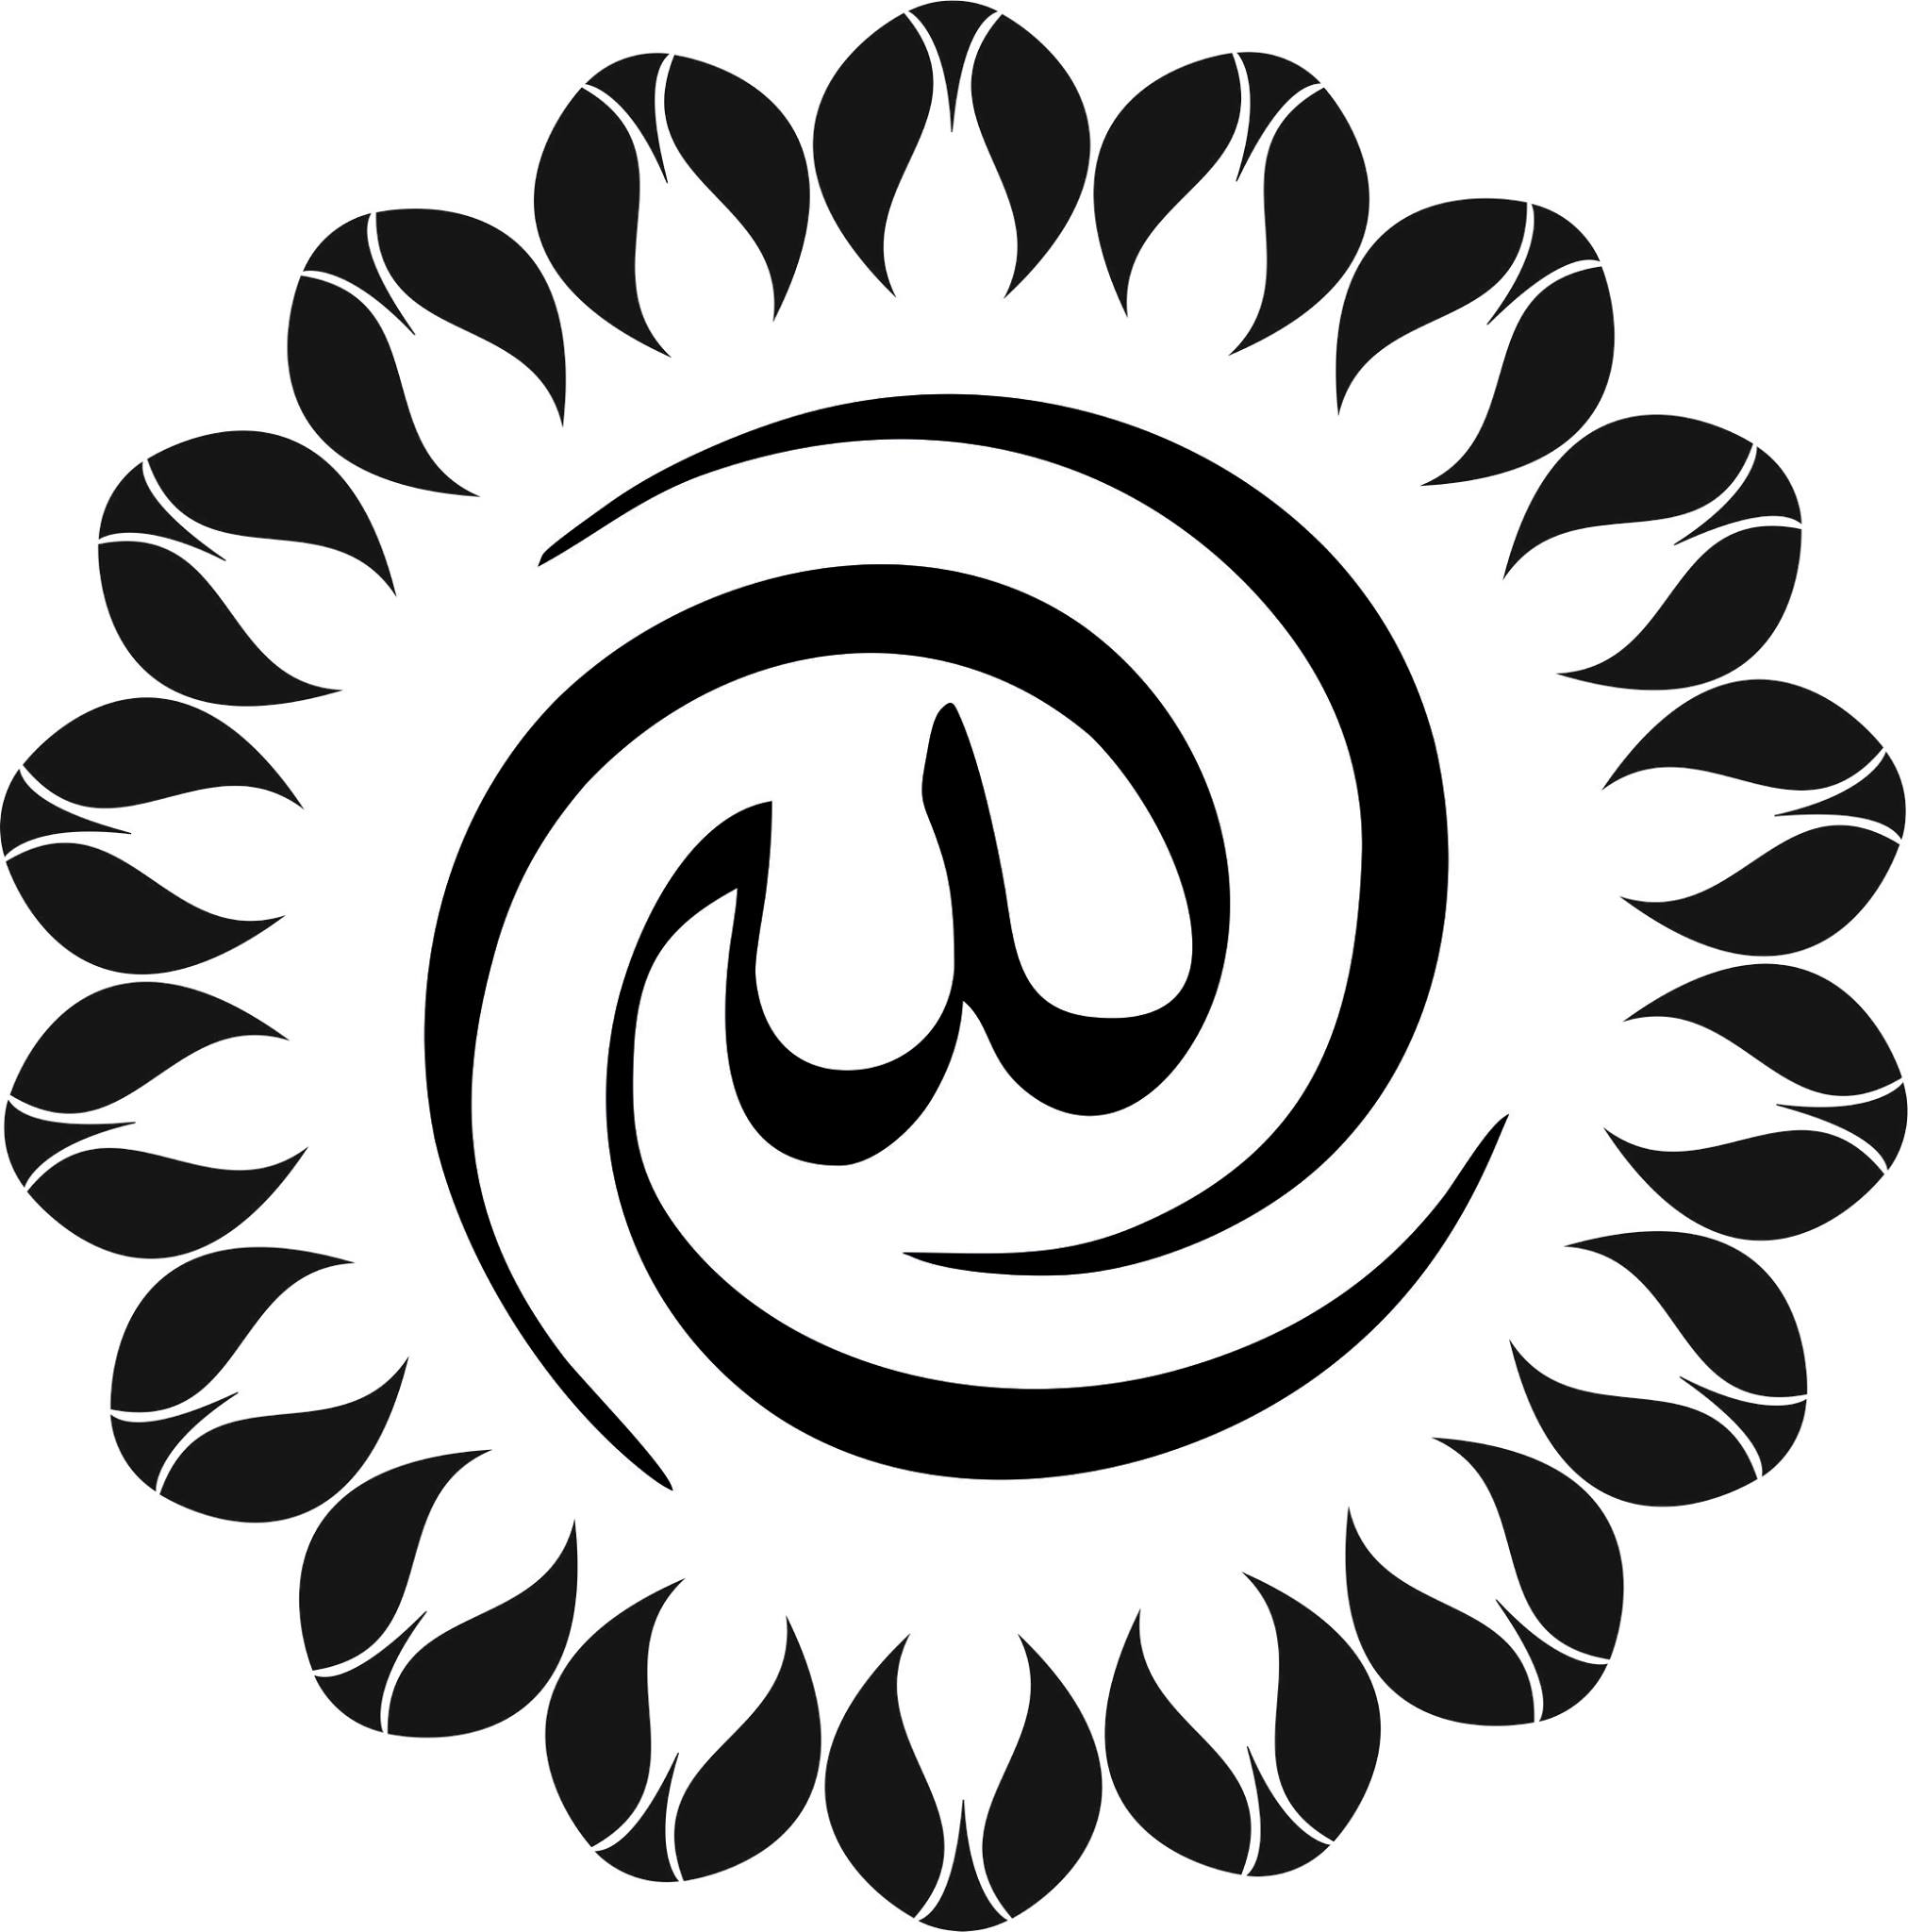 Allah in arabischer Kalligrafie Vektorgrafiken jpg-Bild